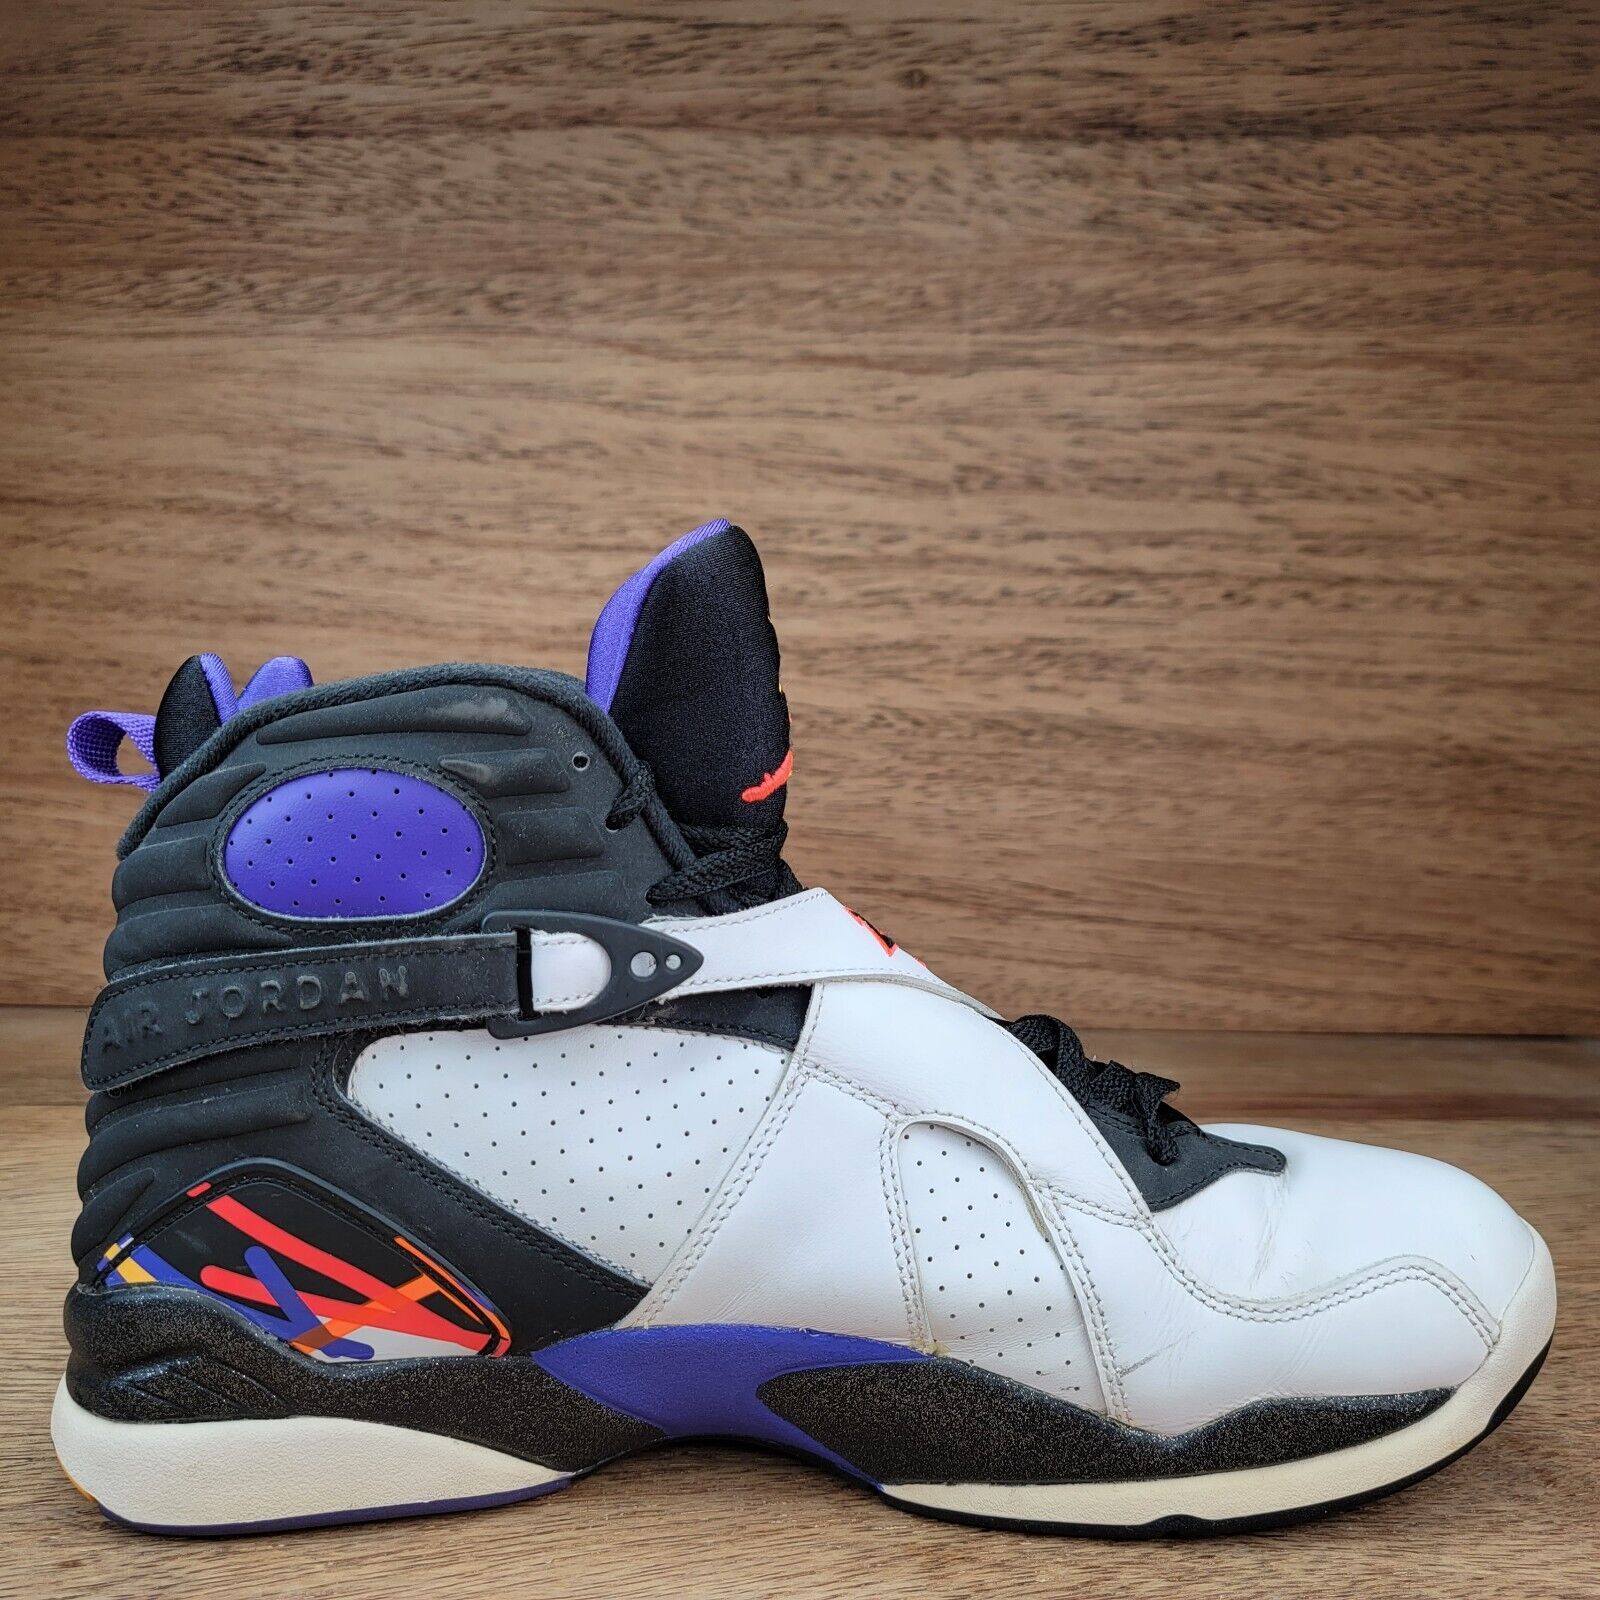 Air Jordan 8 Retro Men's Basketball Shoes Three Peat 305381-142 Lot Size 11.5